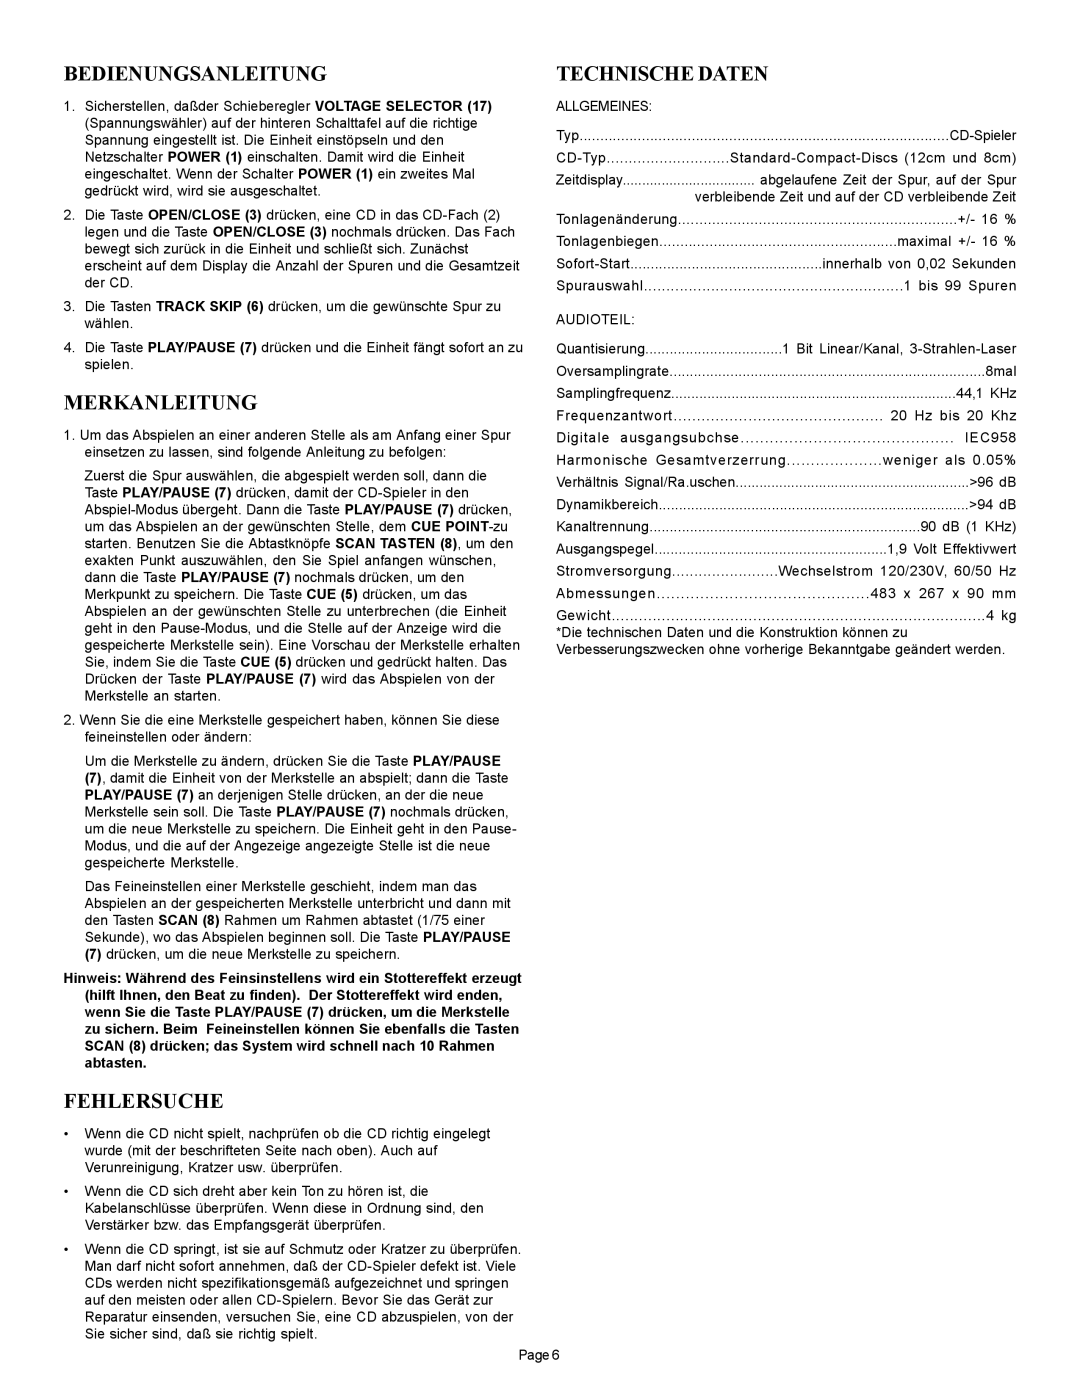 Gemini CD-110 manual Bedienungsanleitung, Merkanleitung, Fehlersuche, Technische Daten 